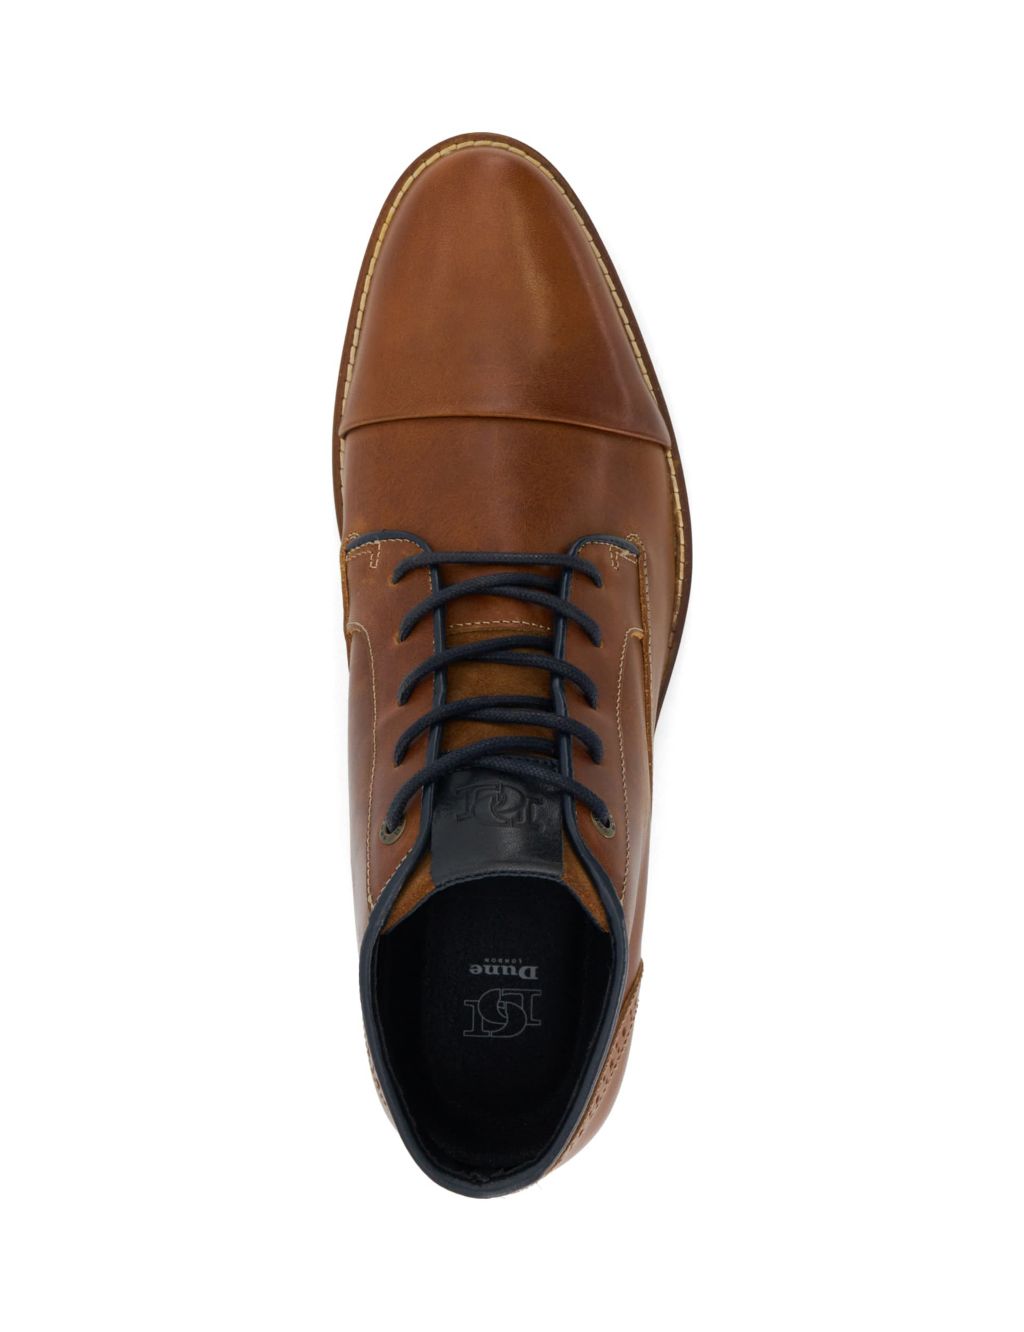 Leather Chukka Boots | Dune London | M&S